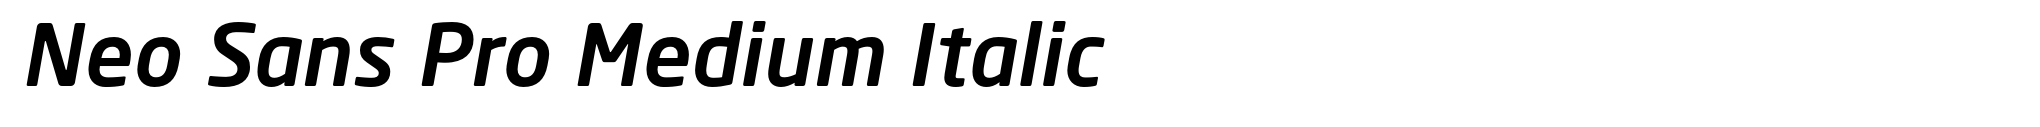 Neo Sans Pro Medium Italic image